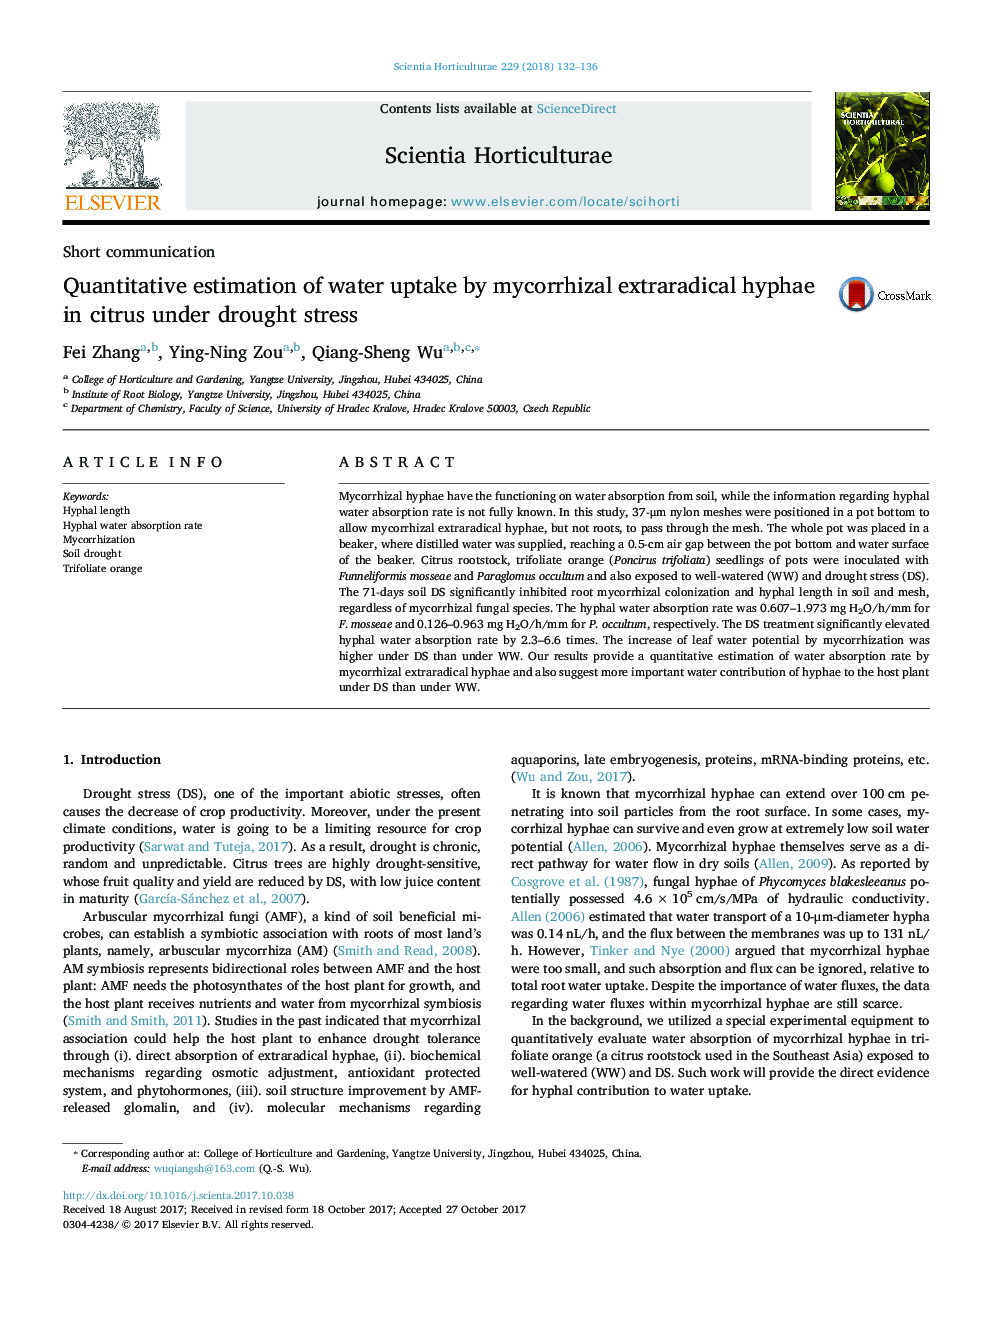 Quantitative estimation of water uptake by mycorrhizal extraradical hyphae in citrus under drought stress